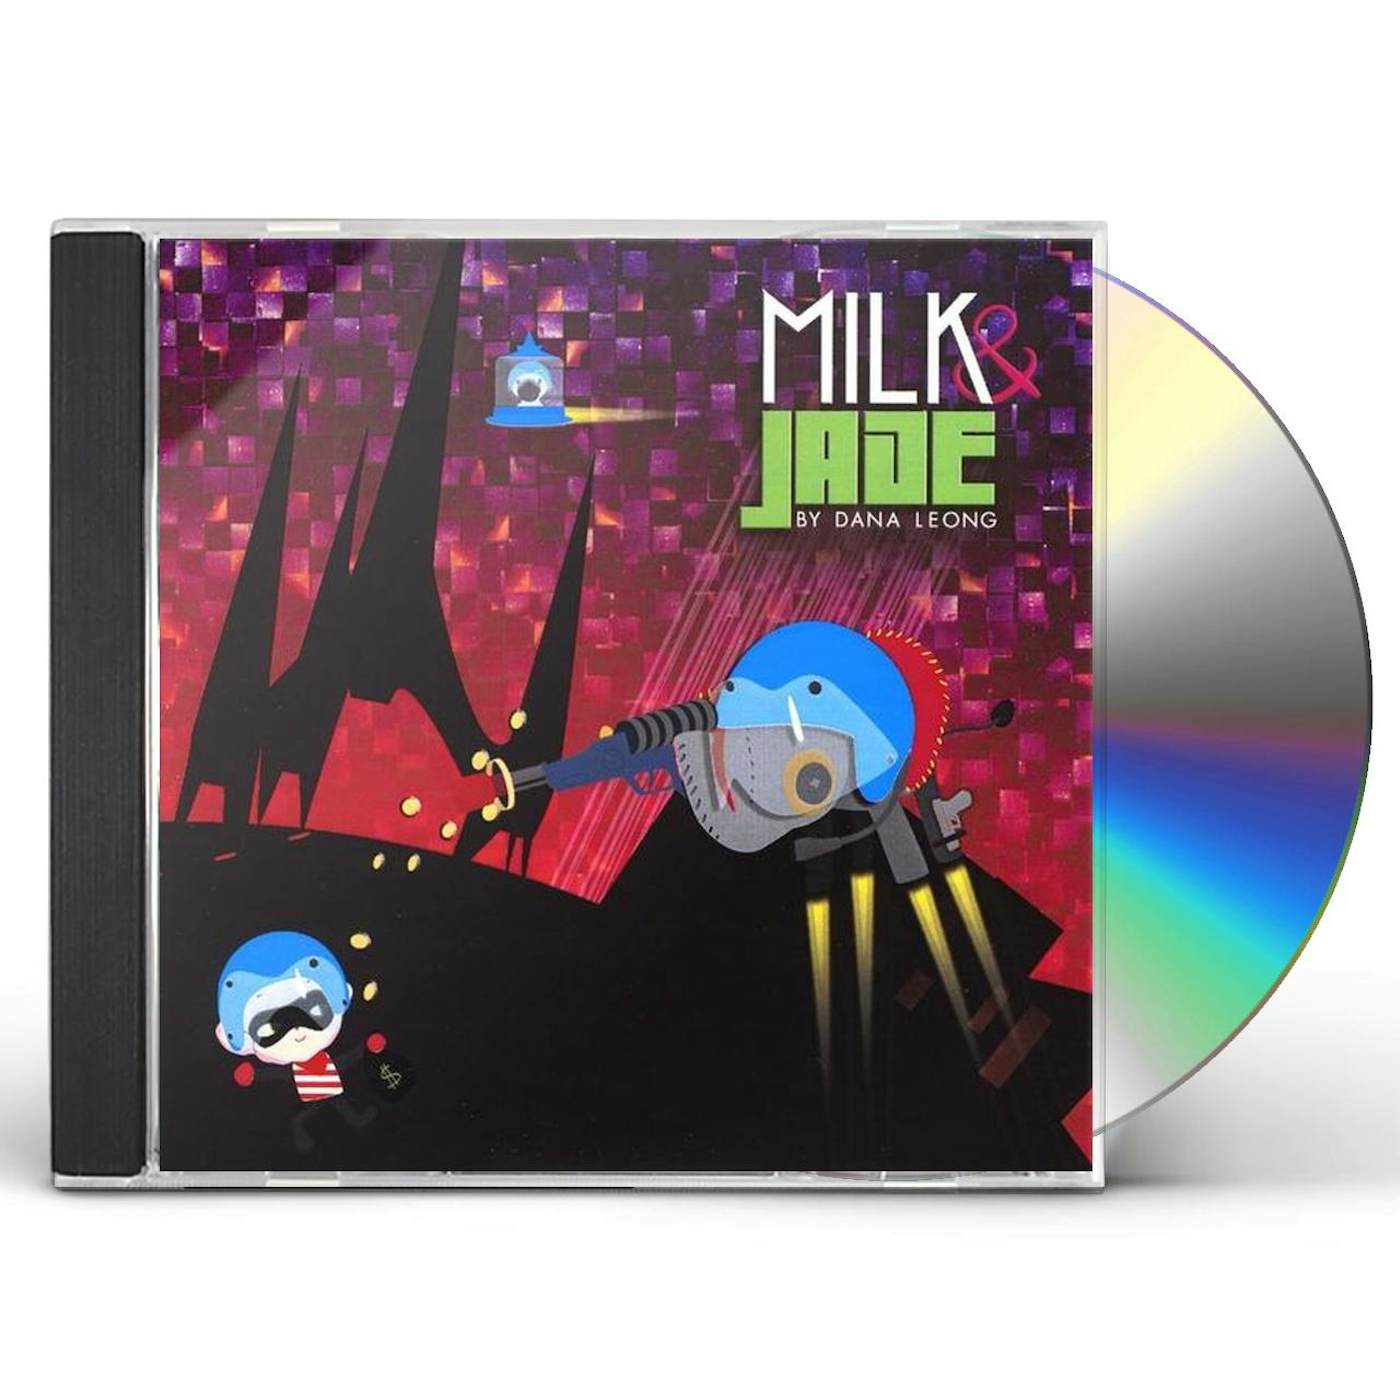 MILK & JADE BY DANA LEONG CD